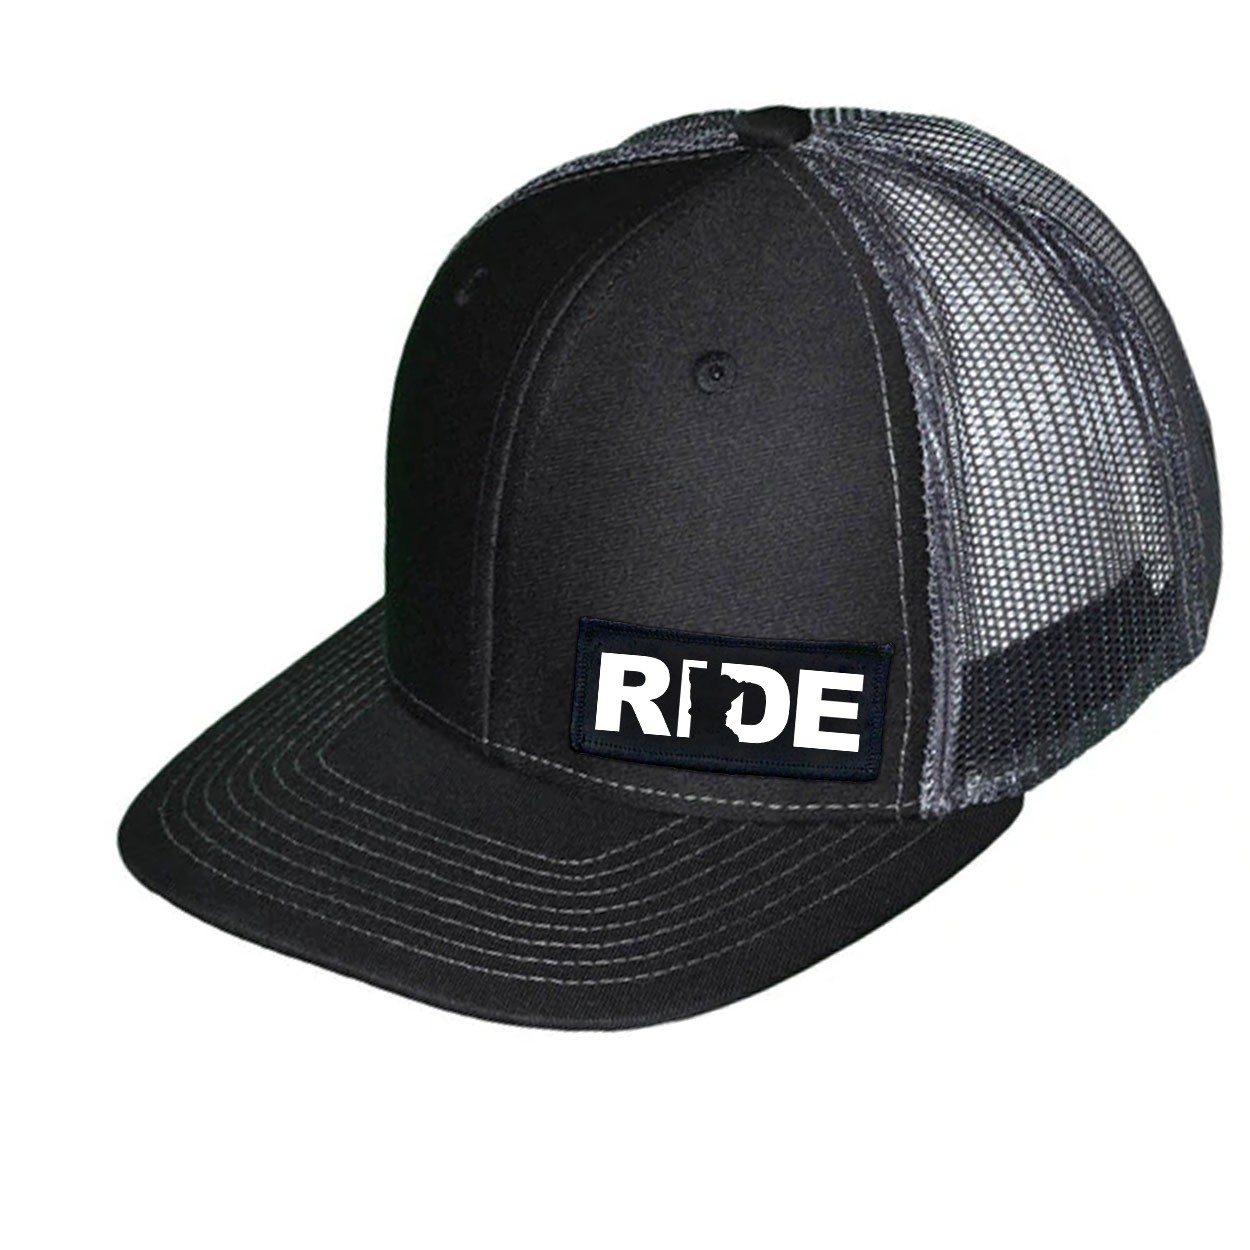 Ride Minnesota Night Out Woven Patch Snapback Trucker Hat Black/Gray (White Logo)